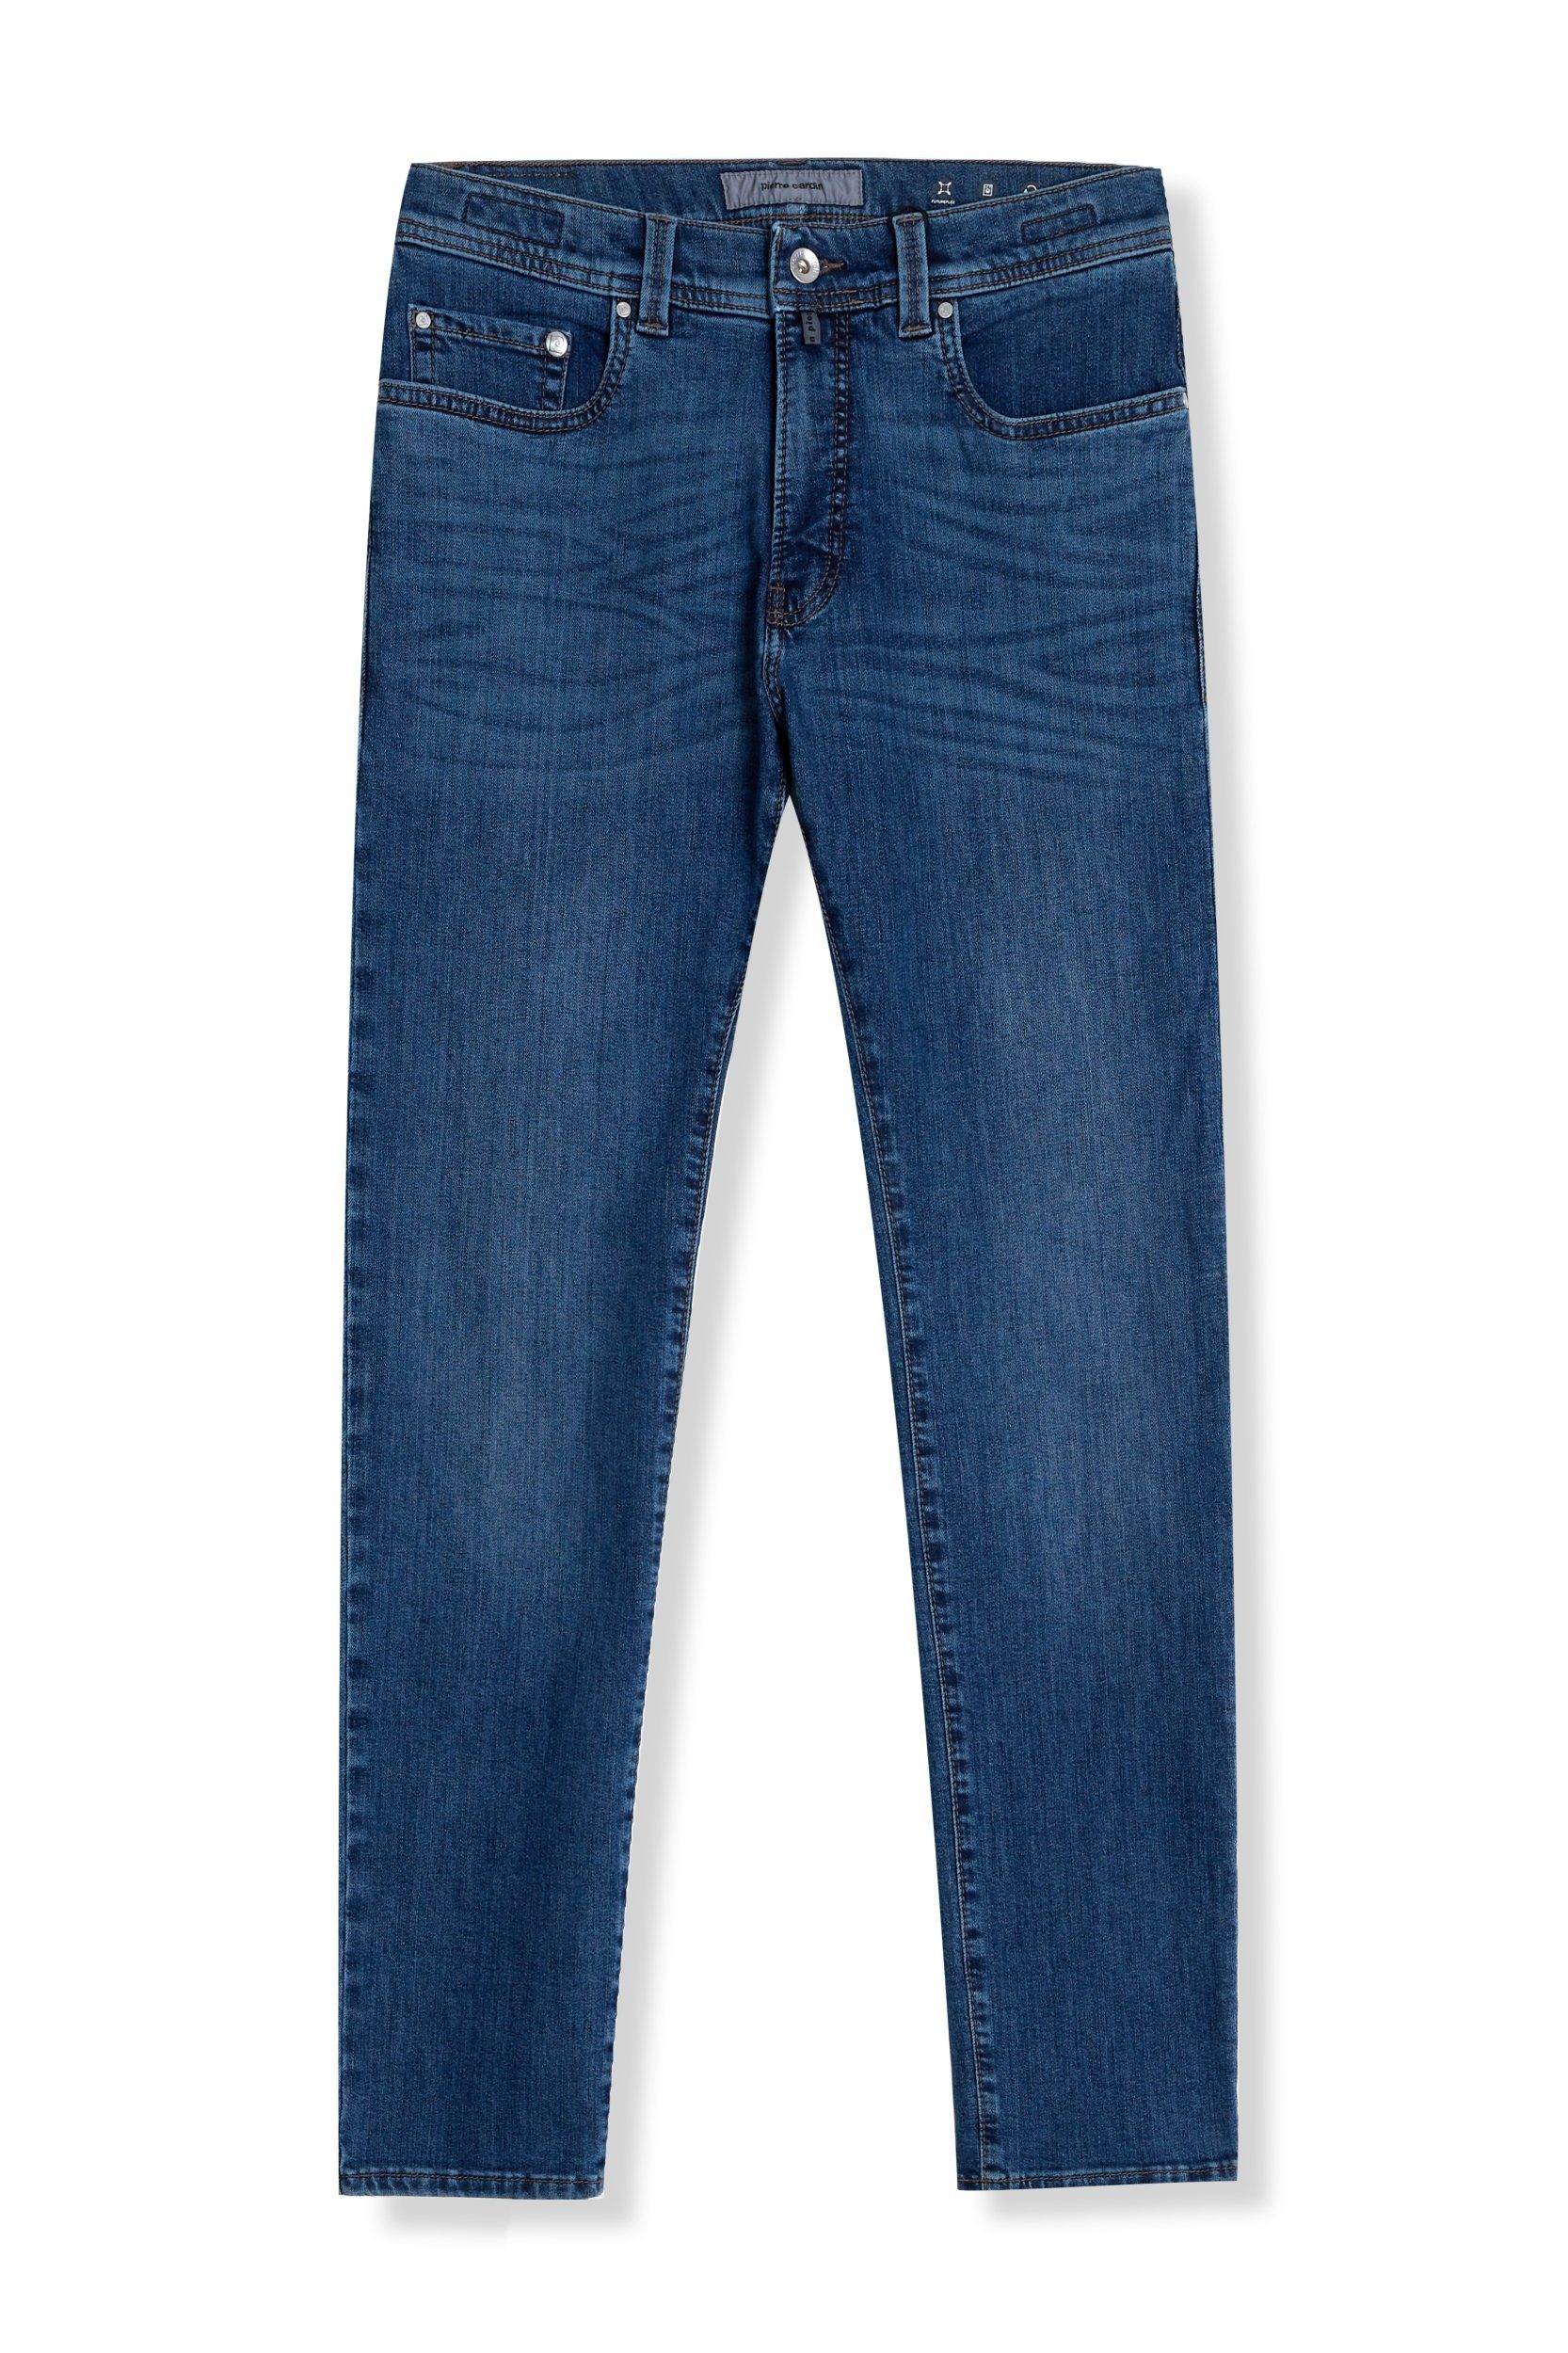 Pierre Cardin 5-Pocket-Jeans Lyon Tapered blue fashion